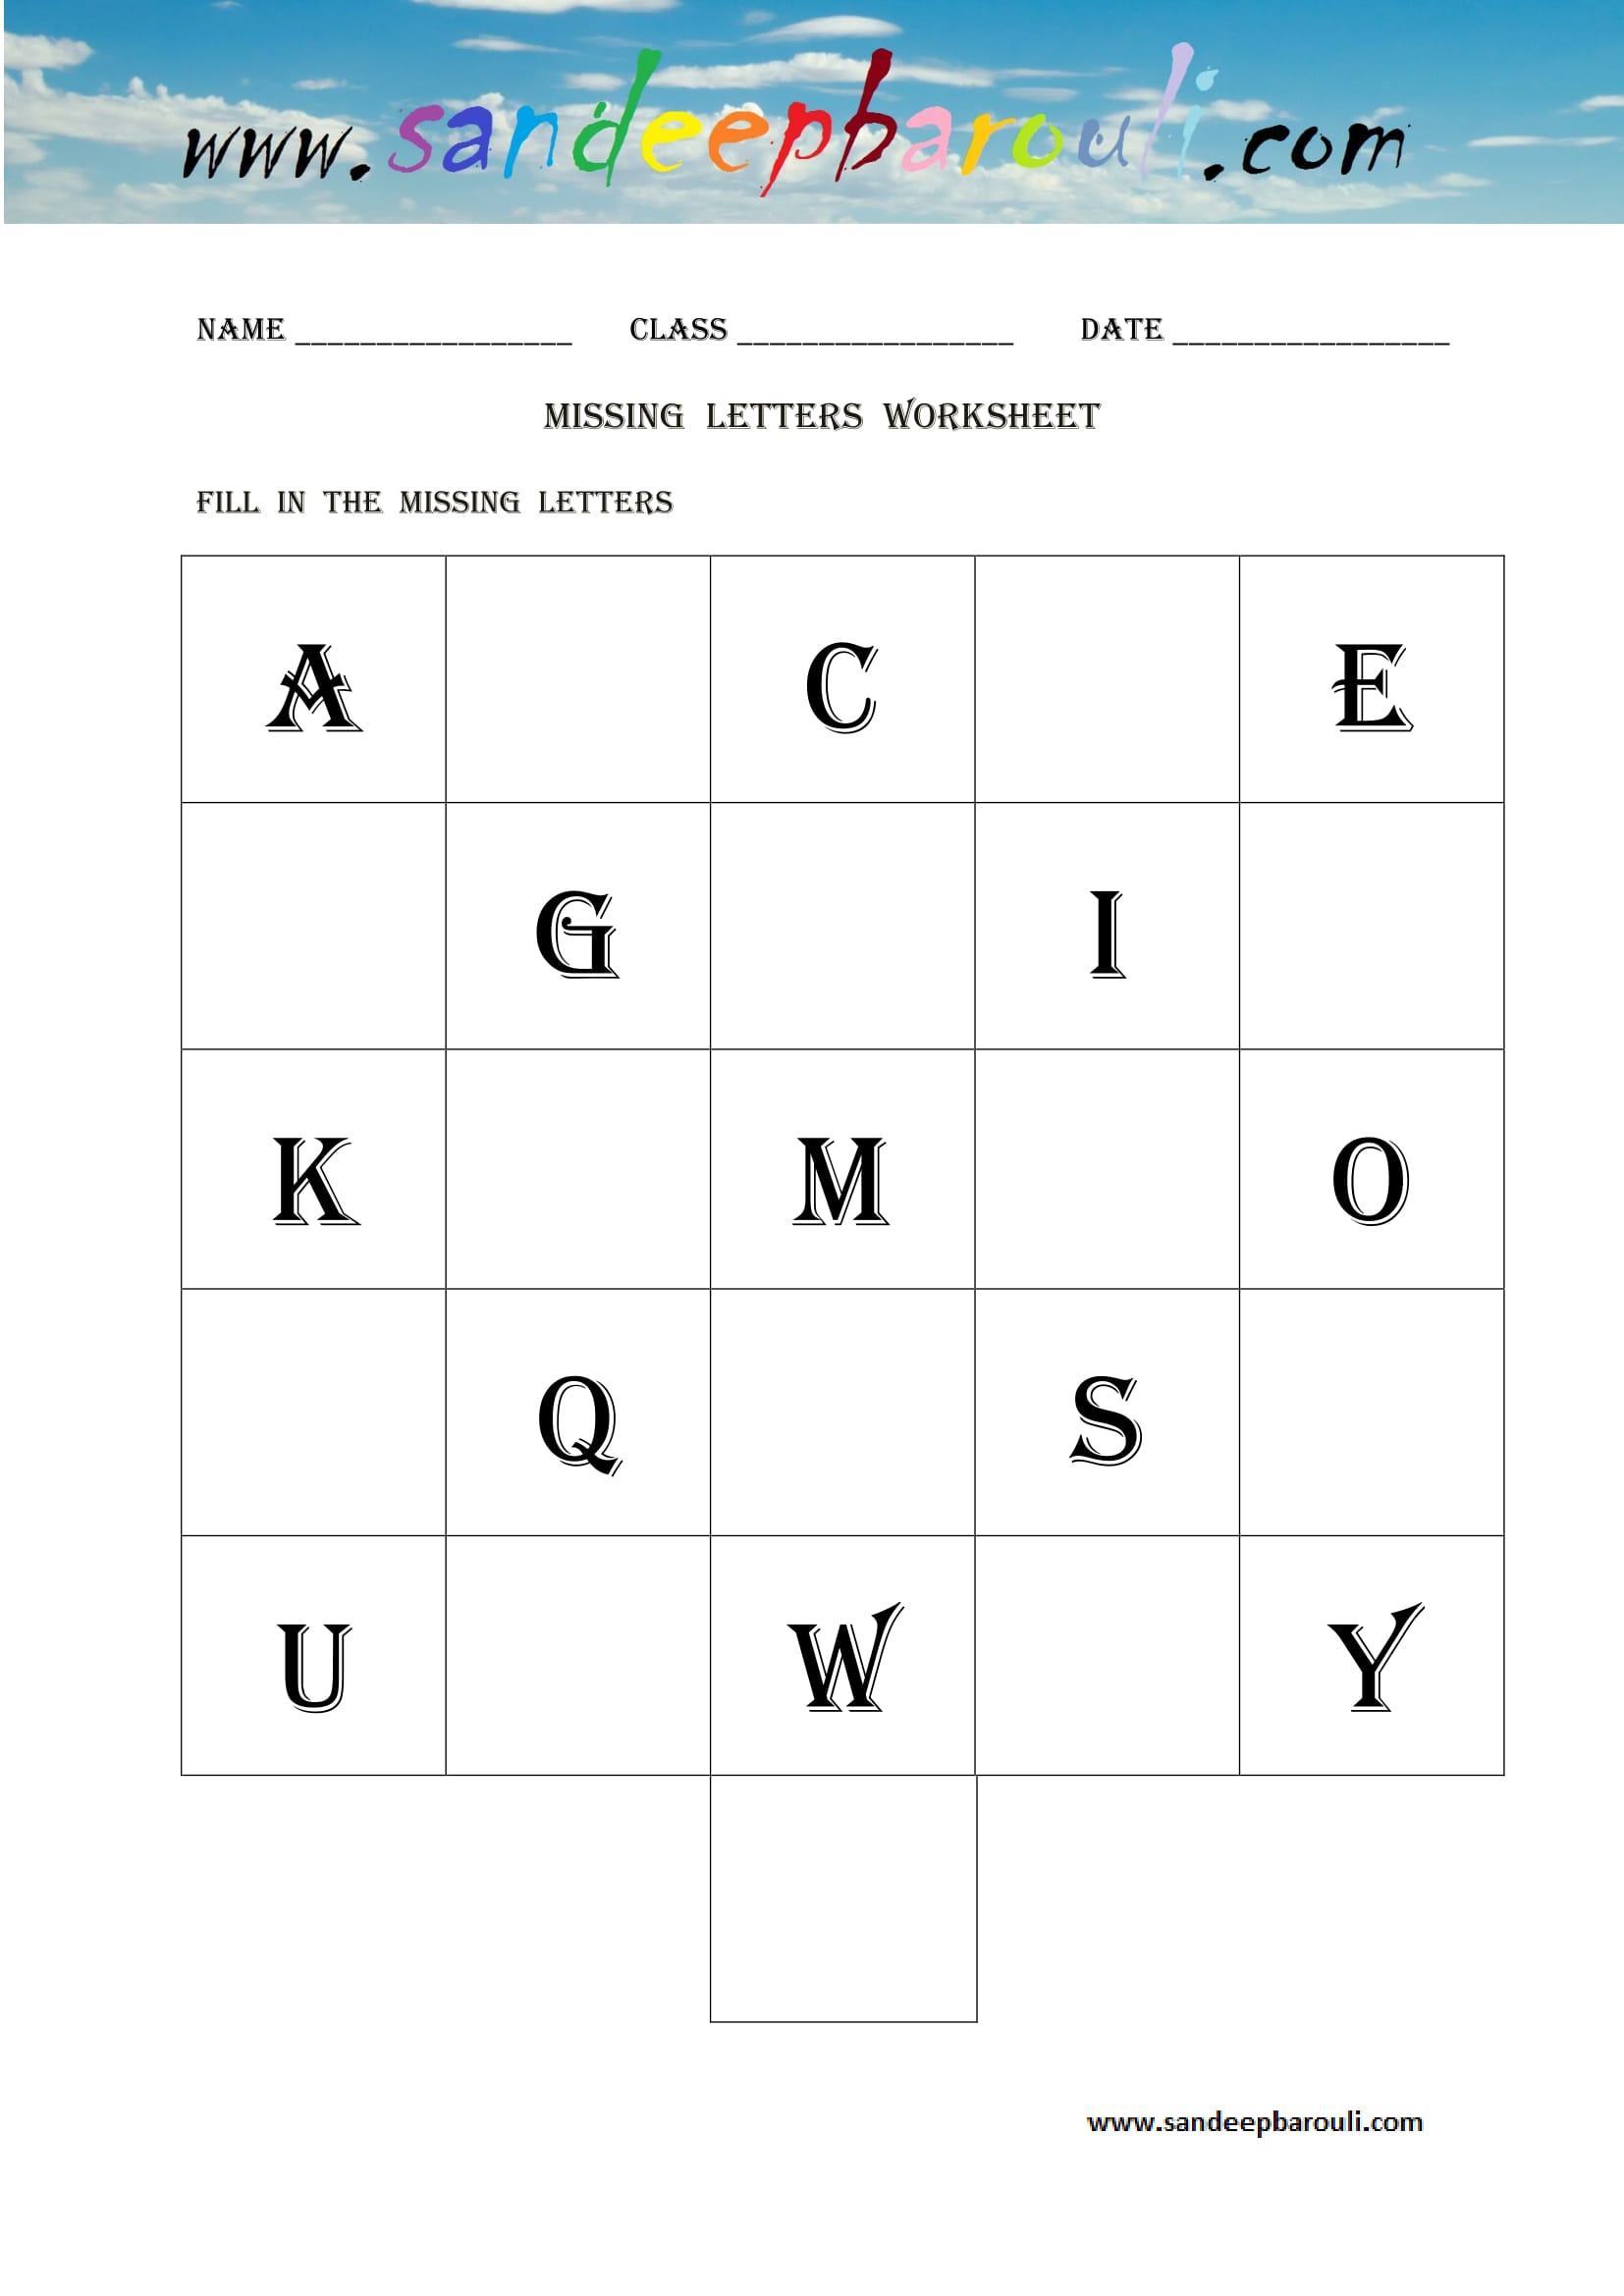 Missing Letters Worksheets Sandeepbarouli Com